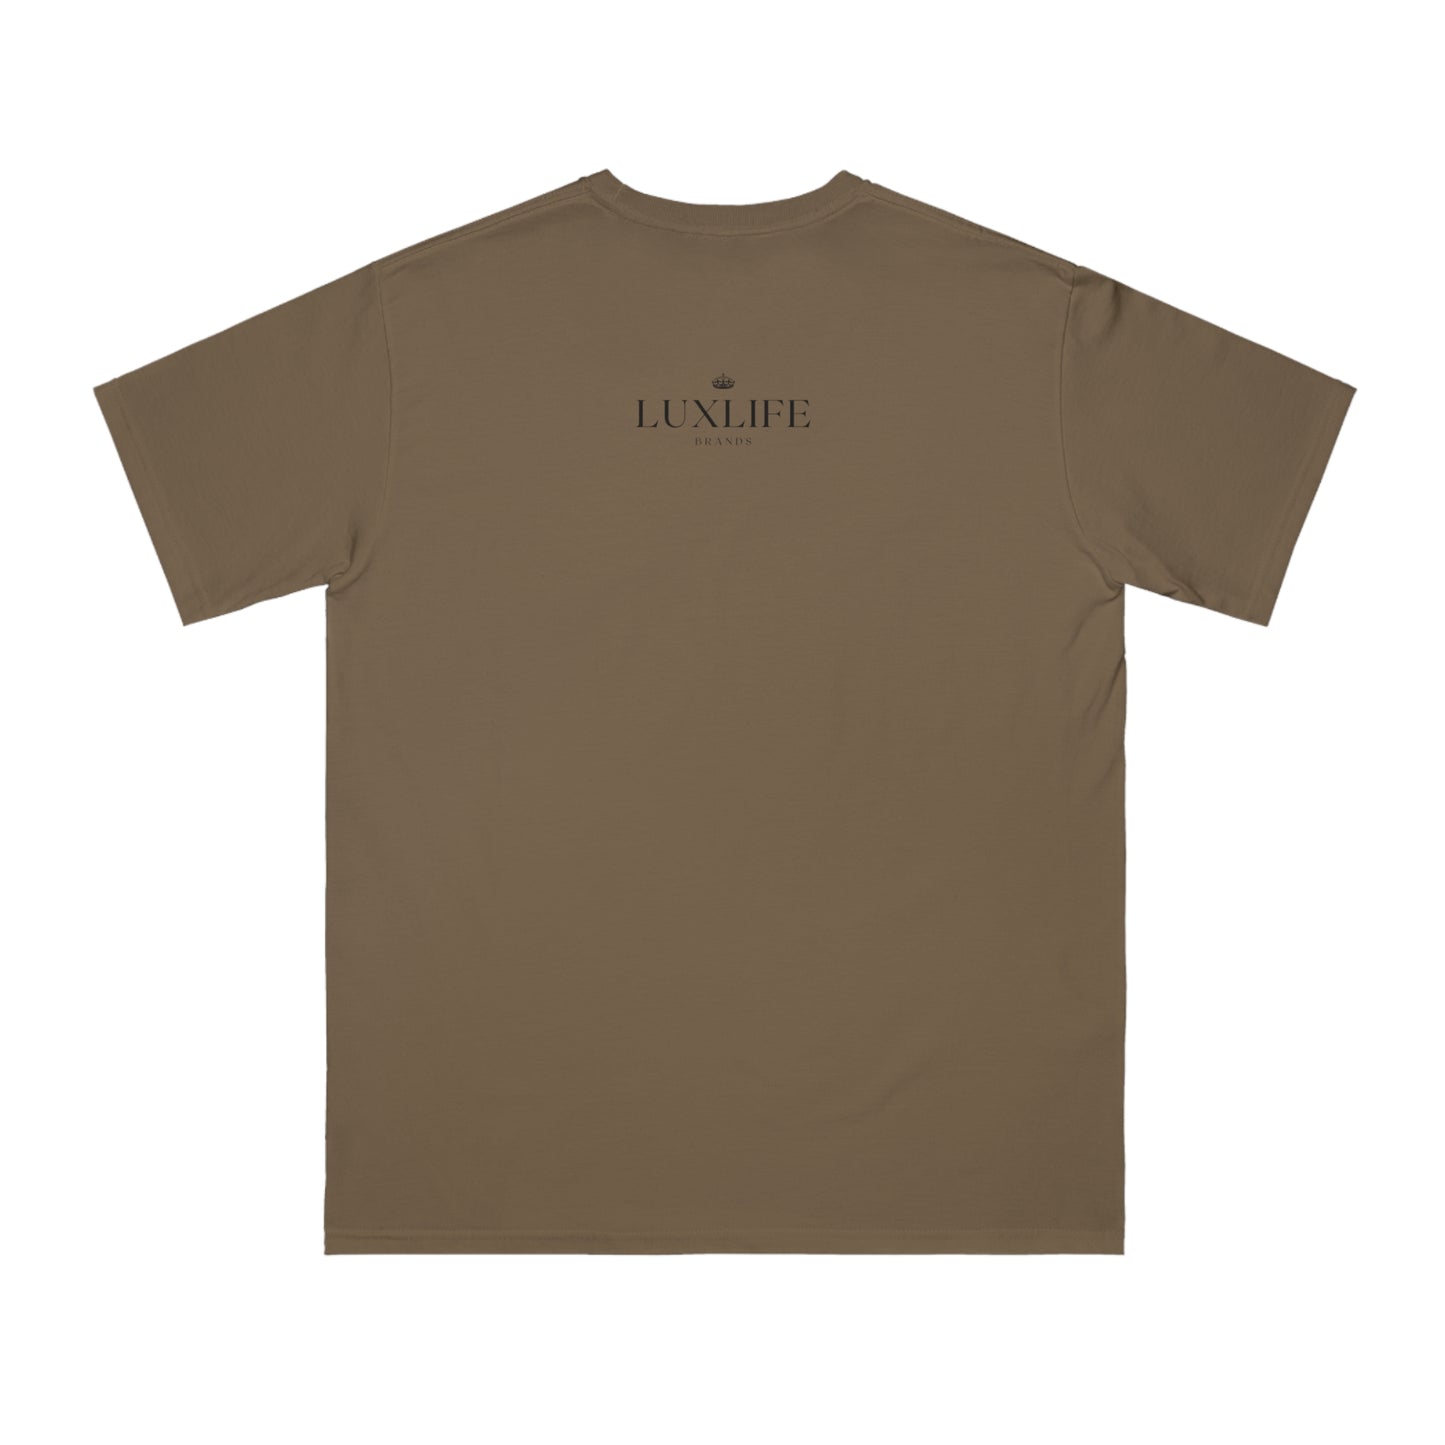 High Profile Organic Unisex Classic T-Shirt Printify